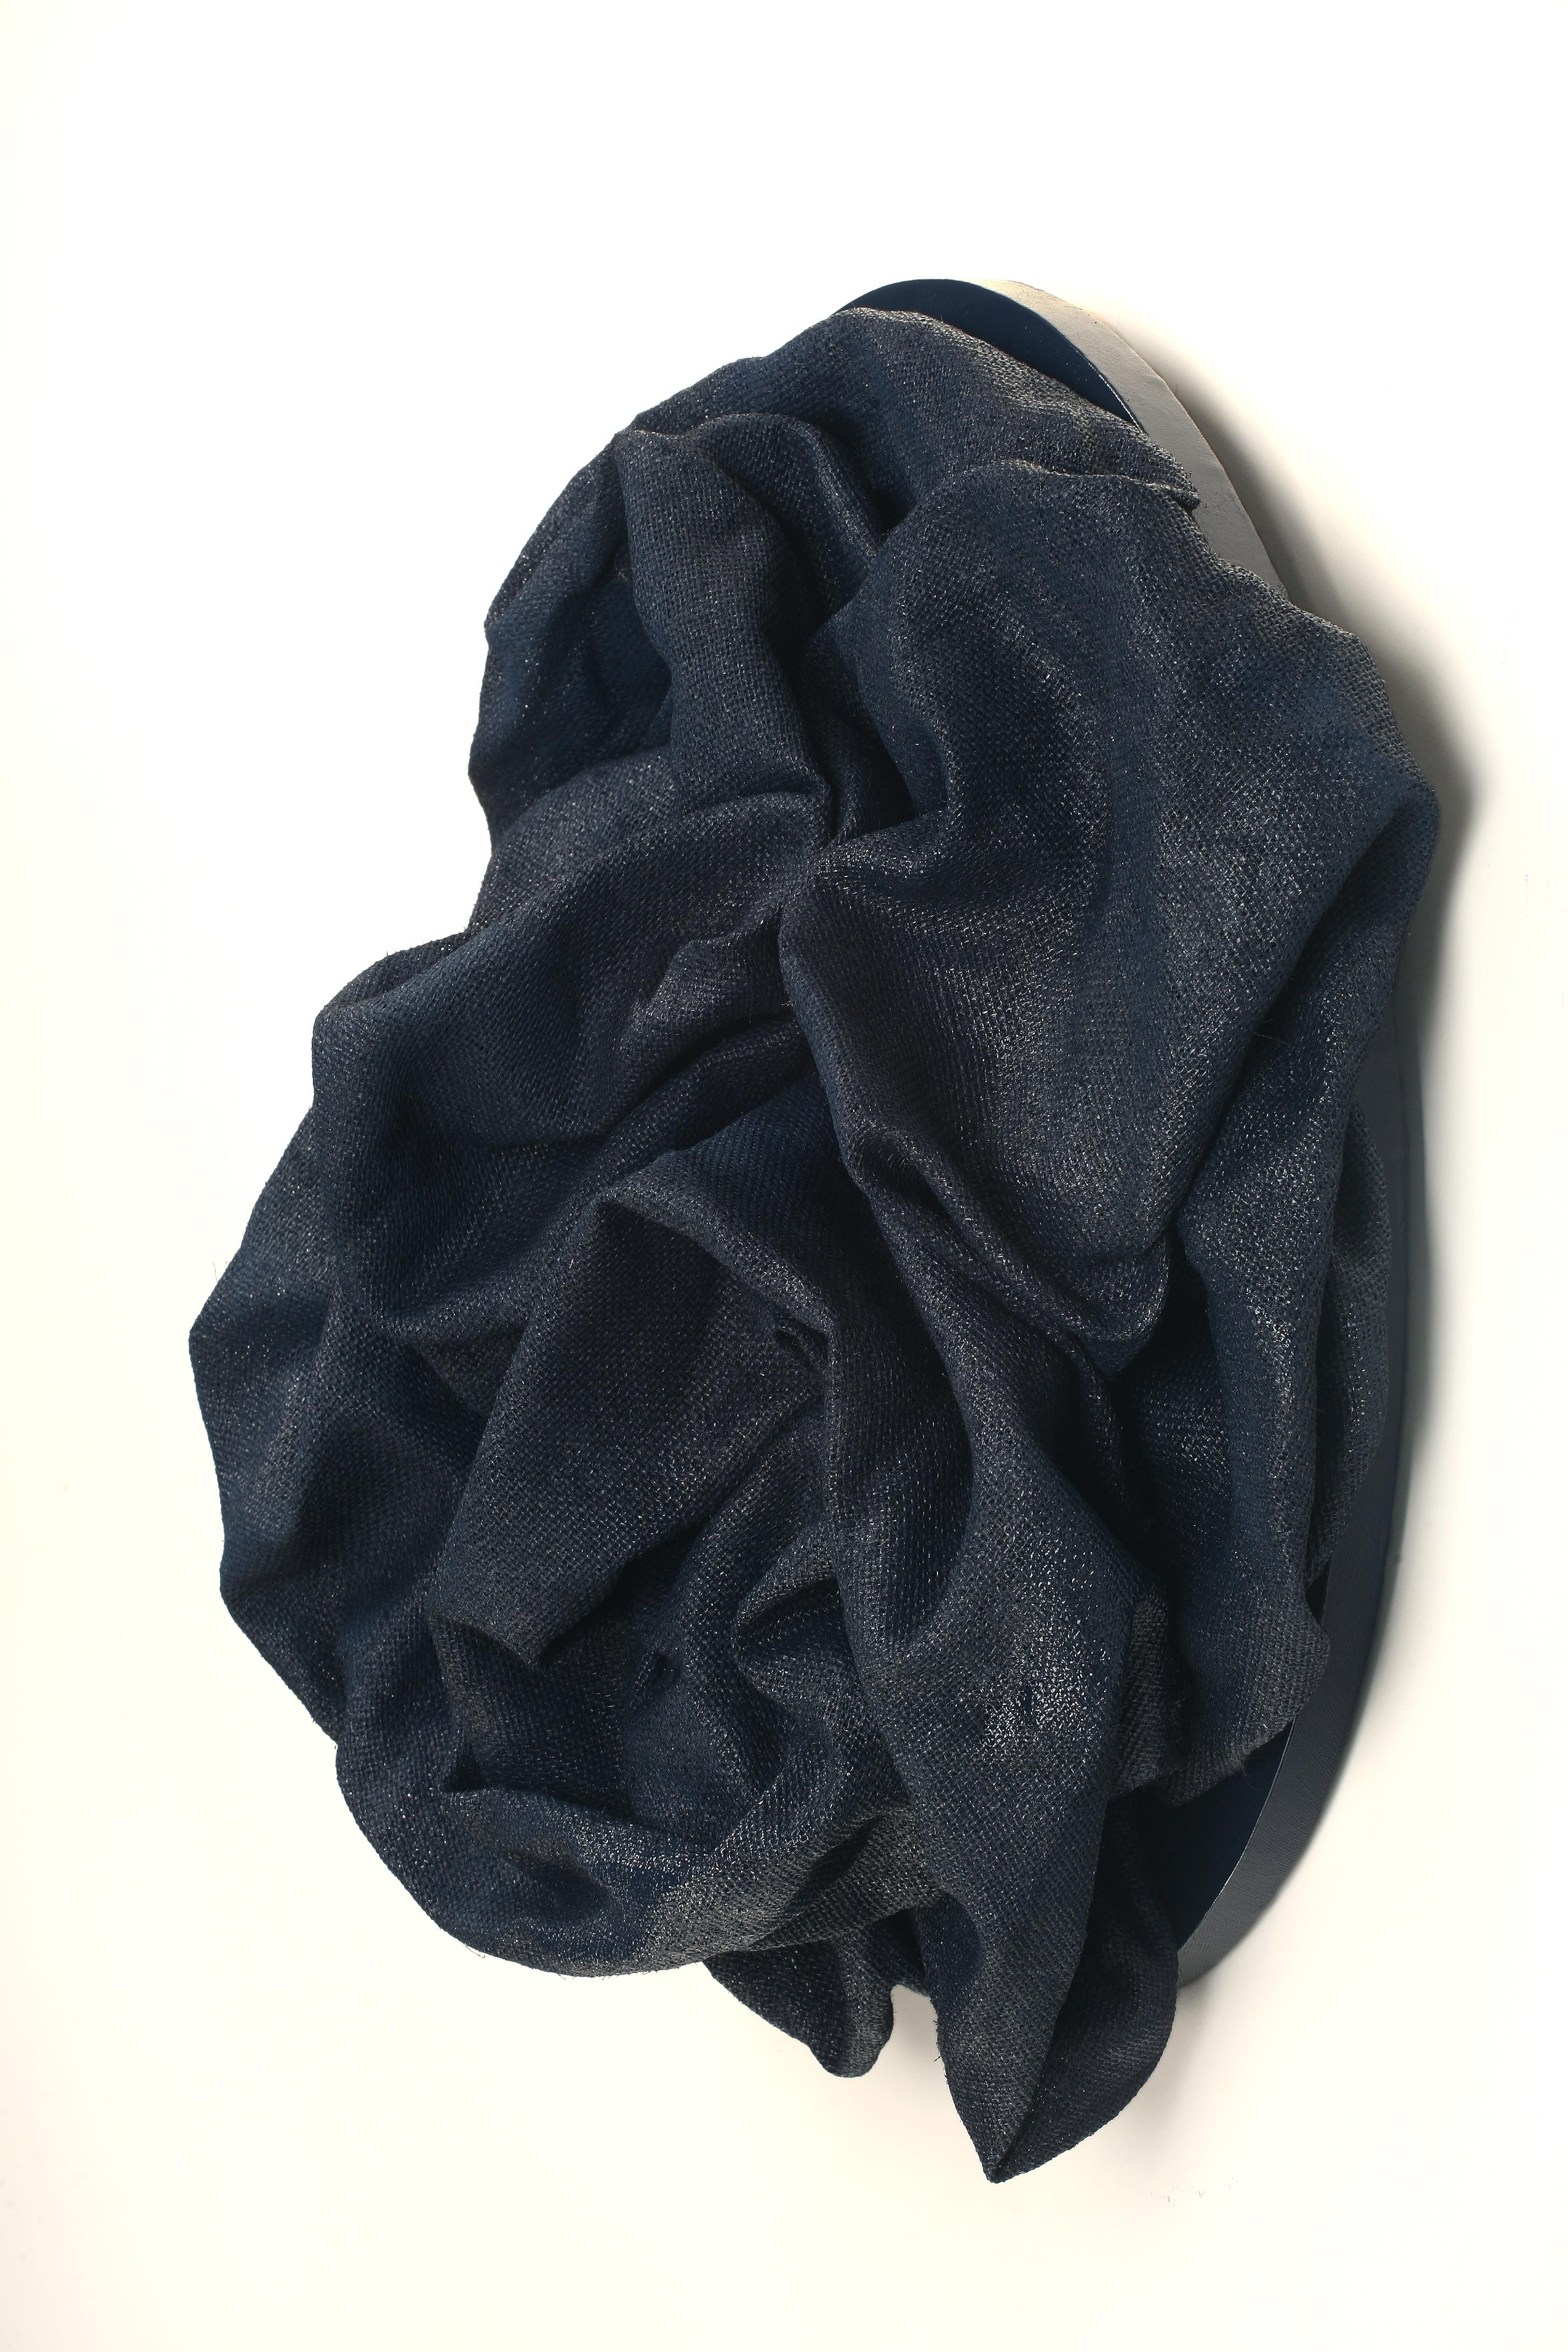 Indigo Folds I (fabric, wall sculpture, dark, contemporary design, textile arts - Contemporary Sculpture by Chloe Hedden